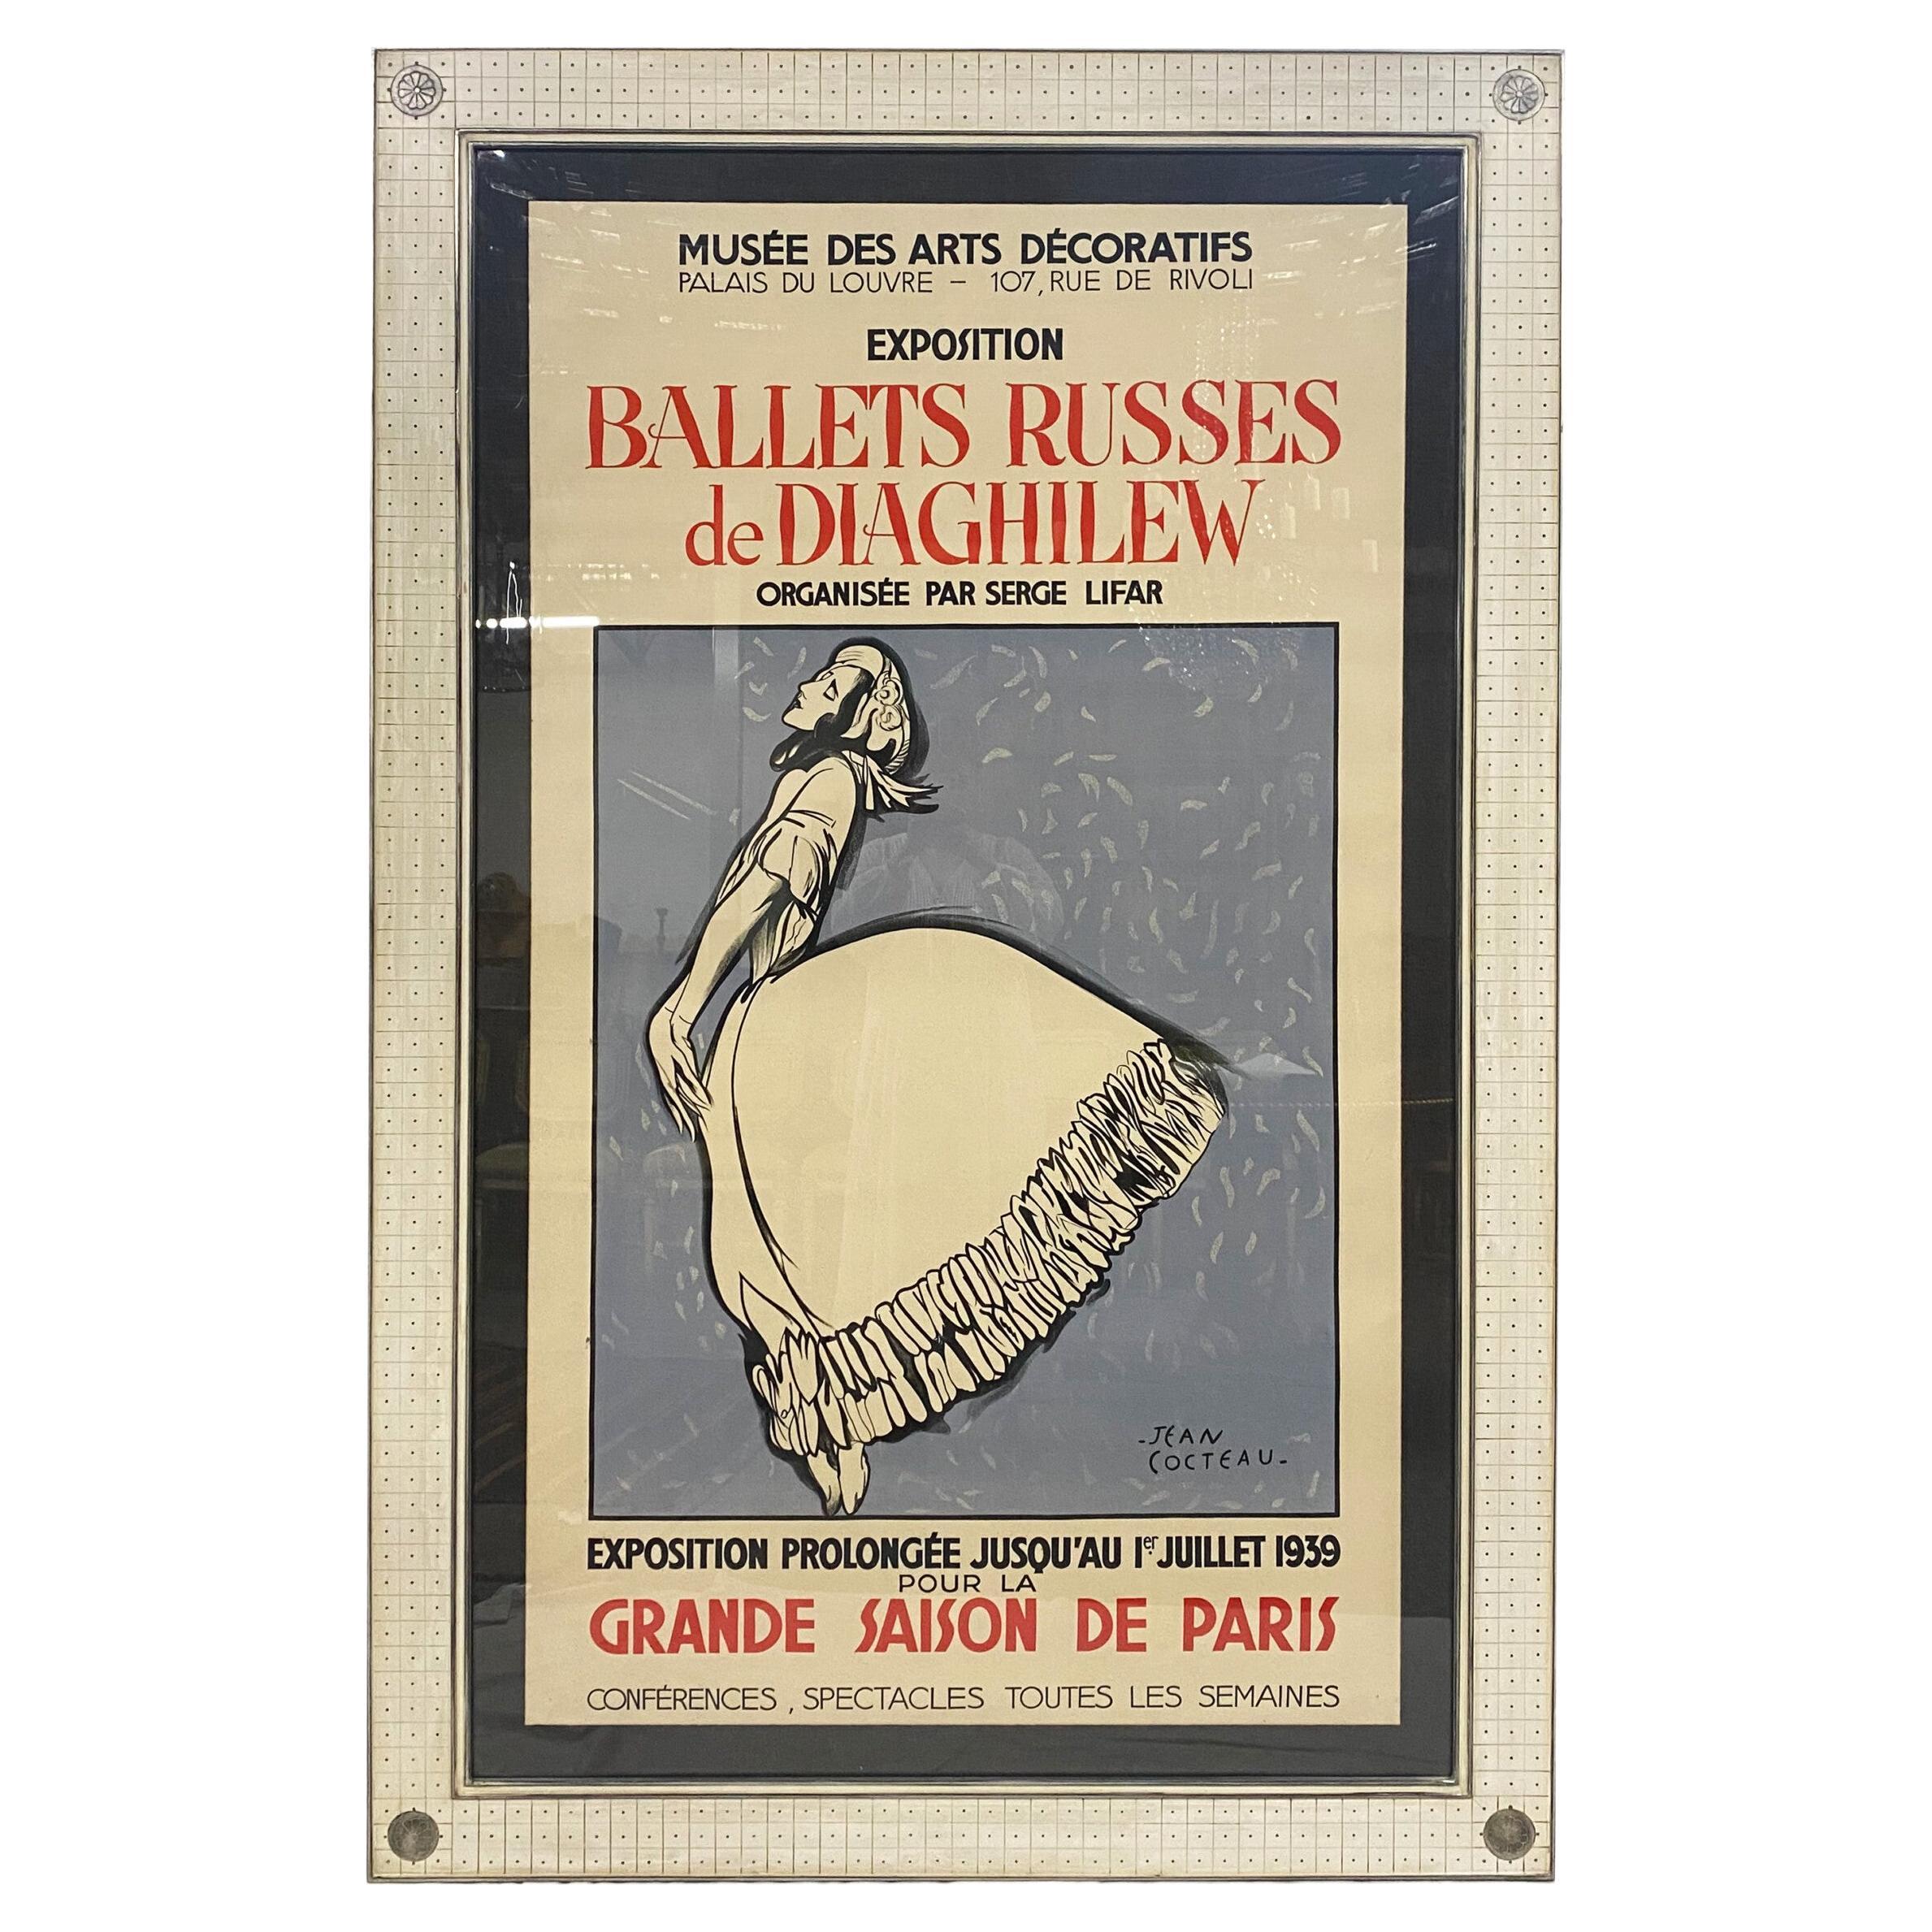 Framed, Original Vintage "Ballets Russes de Diaghilew" Poster by Jean Cocteau For Sale